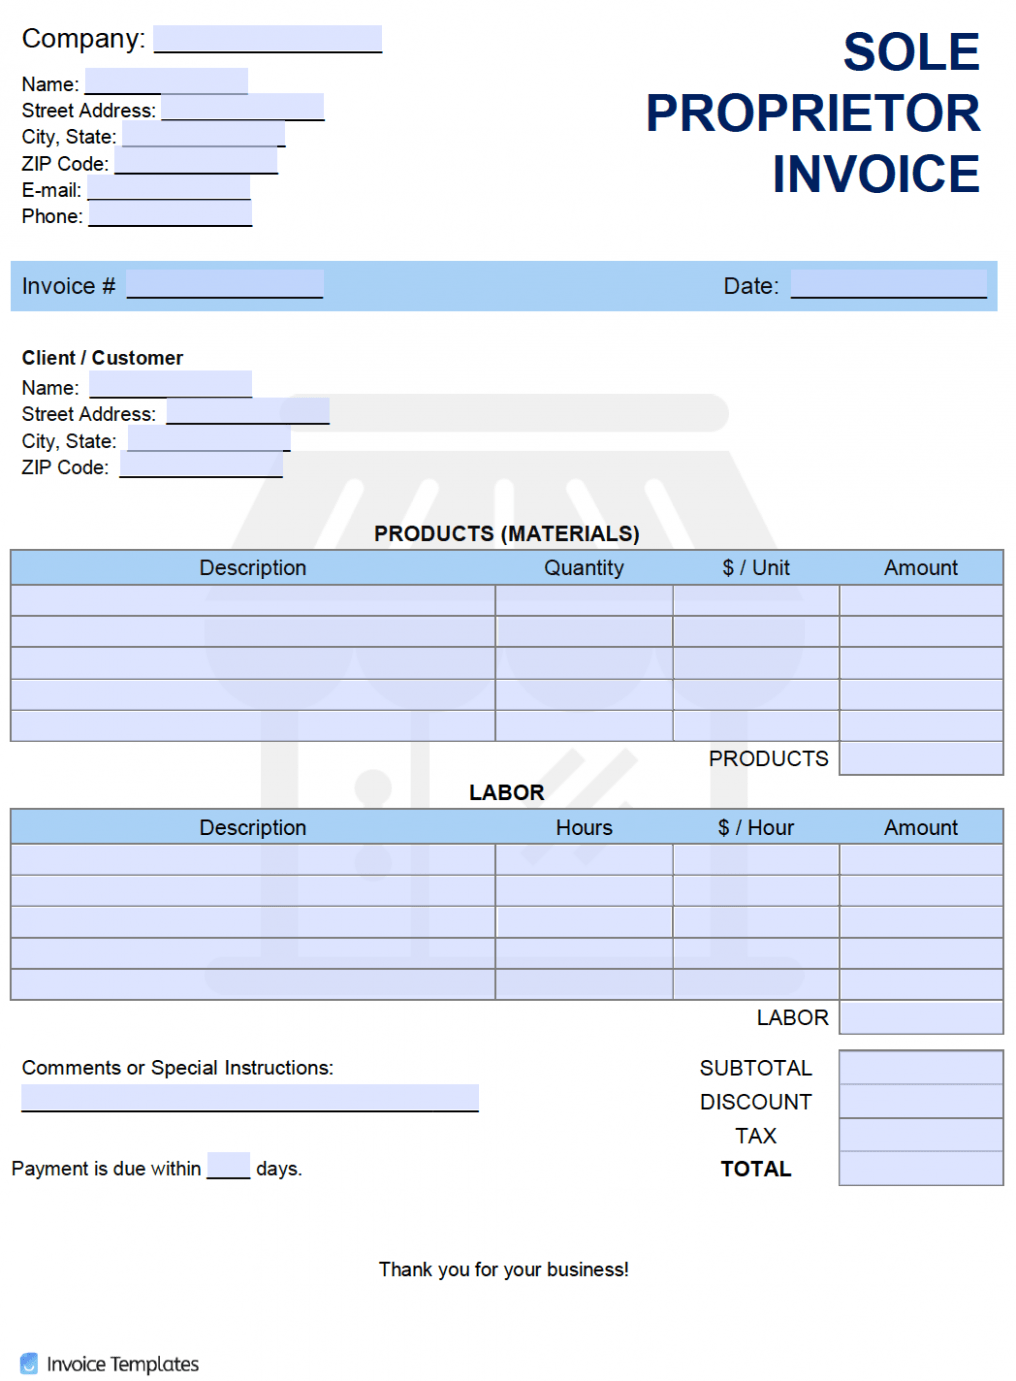 Printable Sole Proprietor Invoice Template Excel